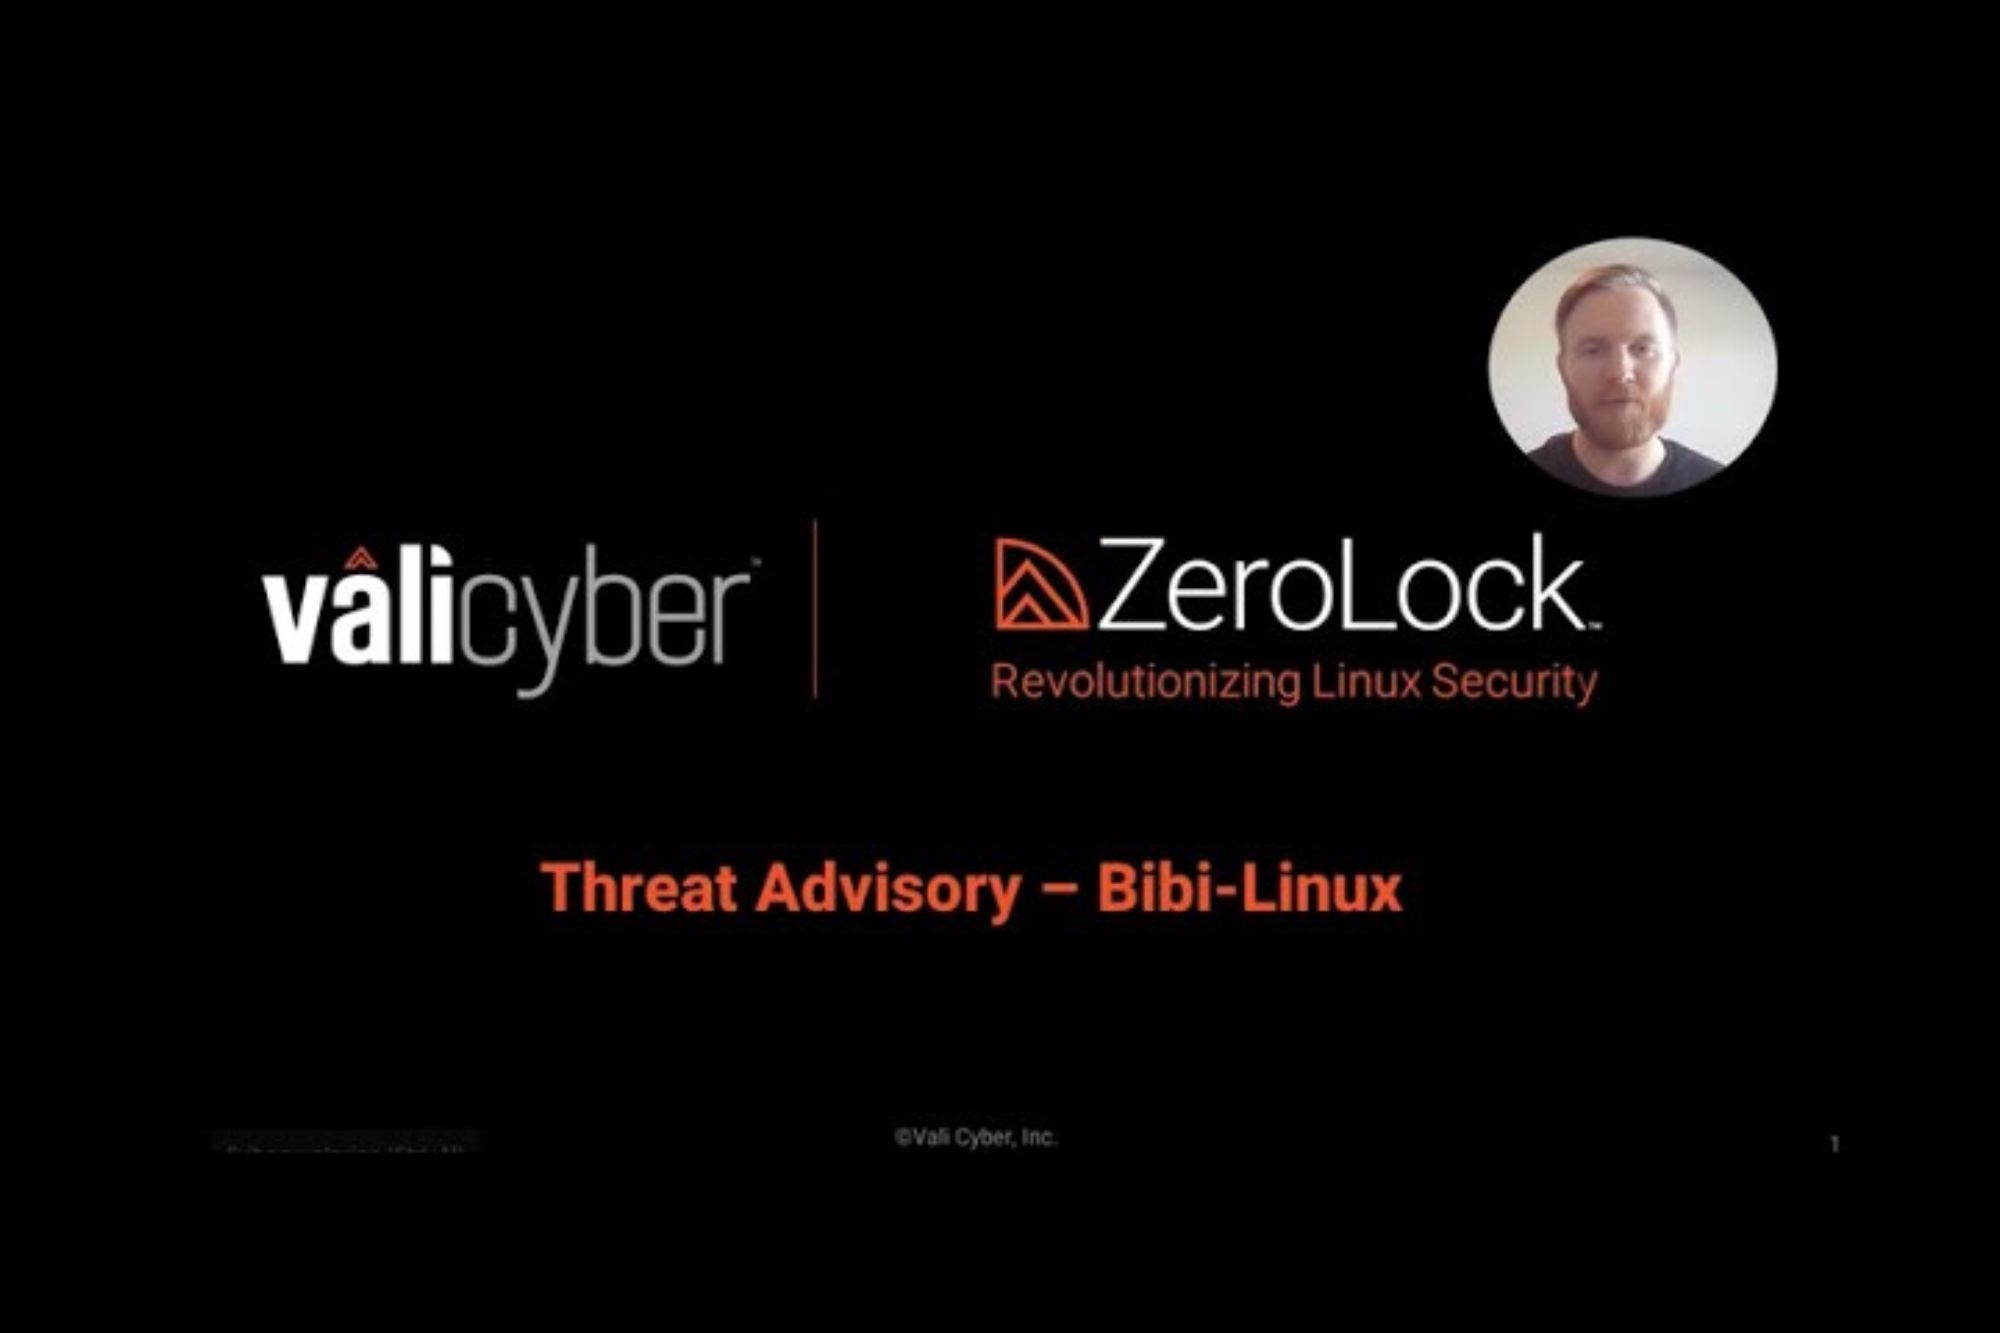 BiBi-Linux begone: Vali Cyber’s ZeroLock triumphs with behavioral detection